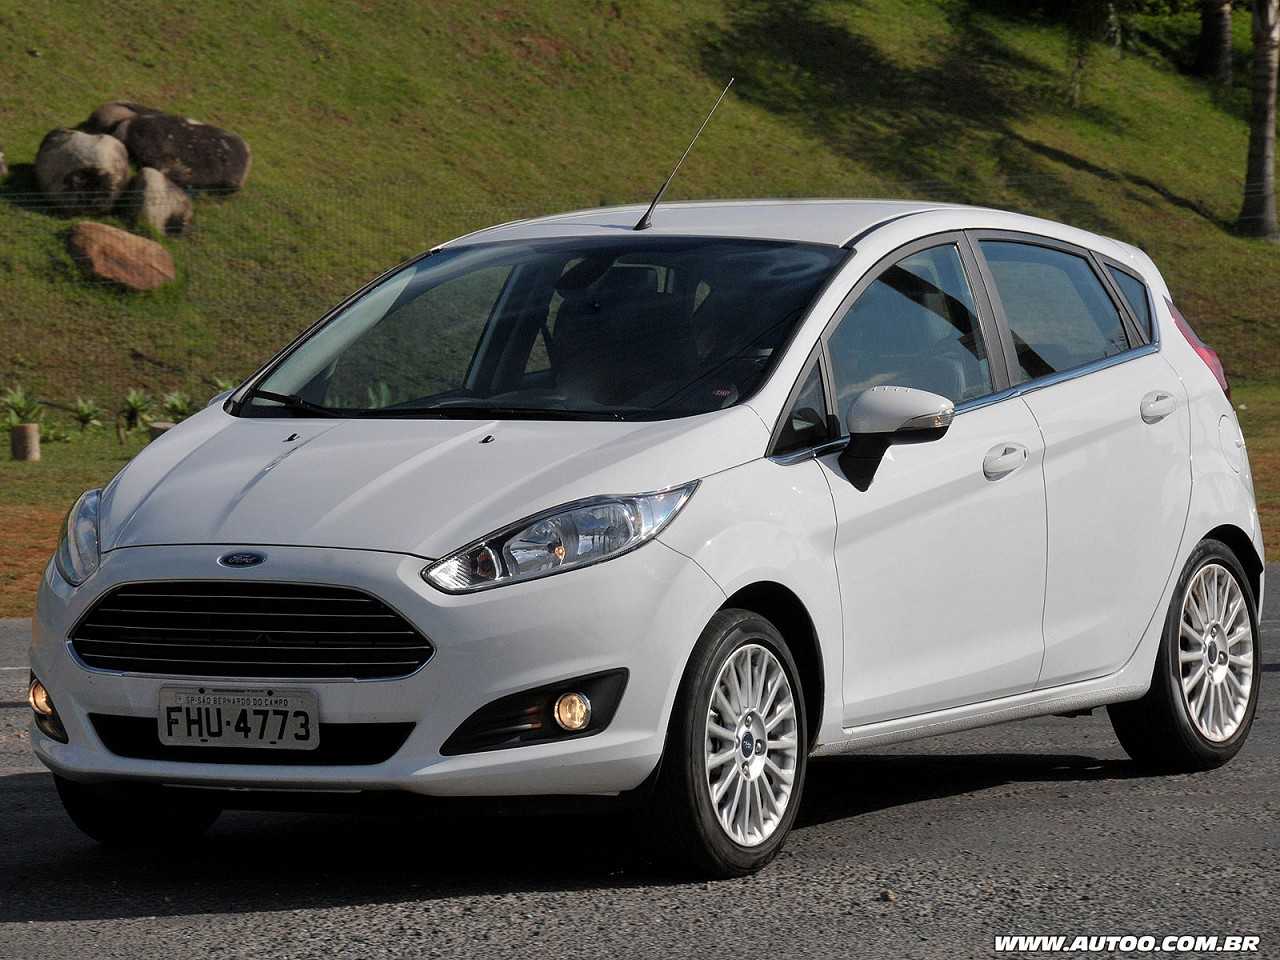 Seminovo 2014: Ford New Fiesta, Hyundai HB20 ou Fiat Punto?